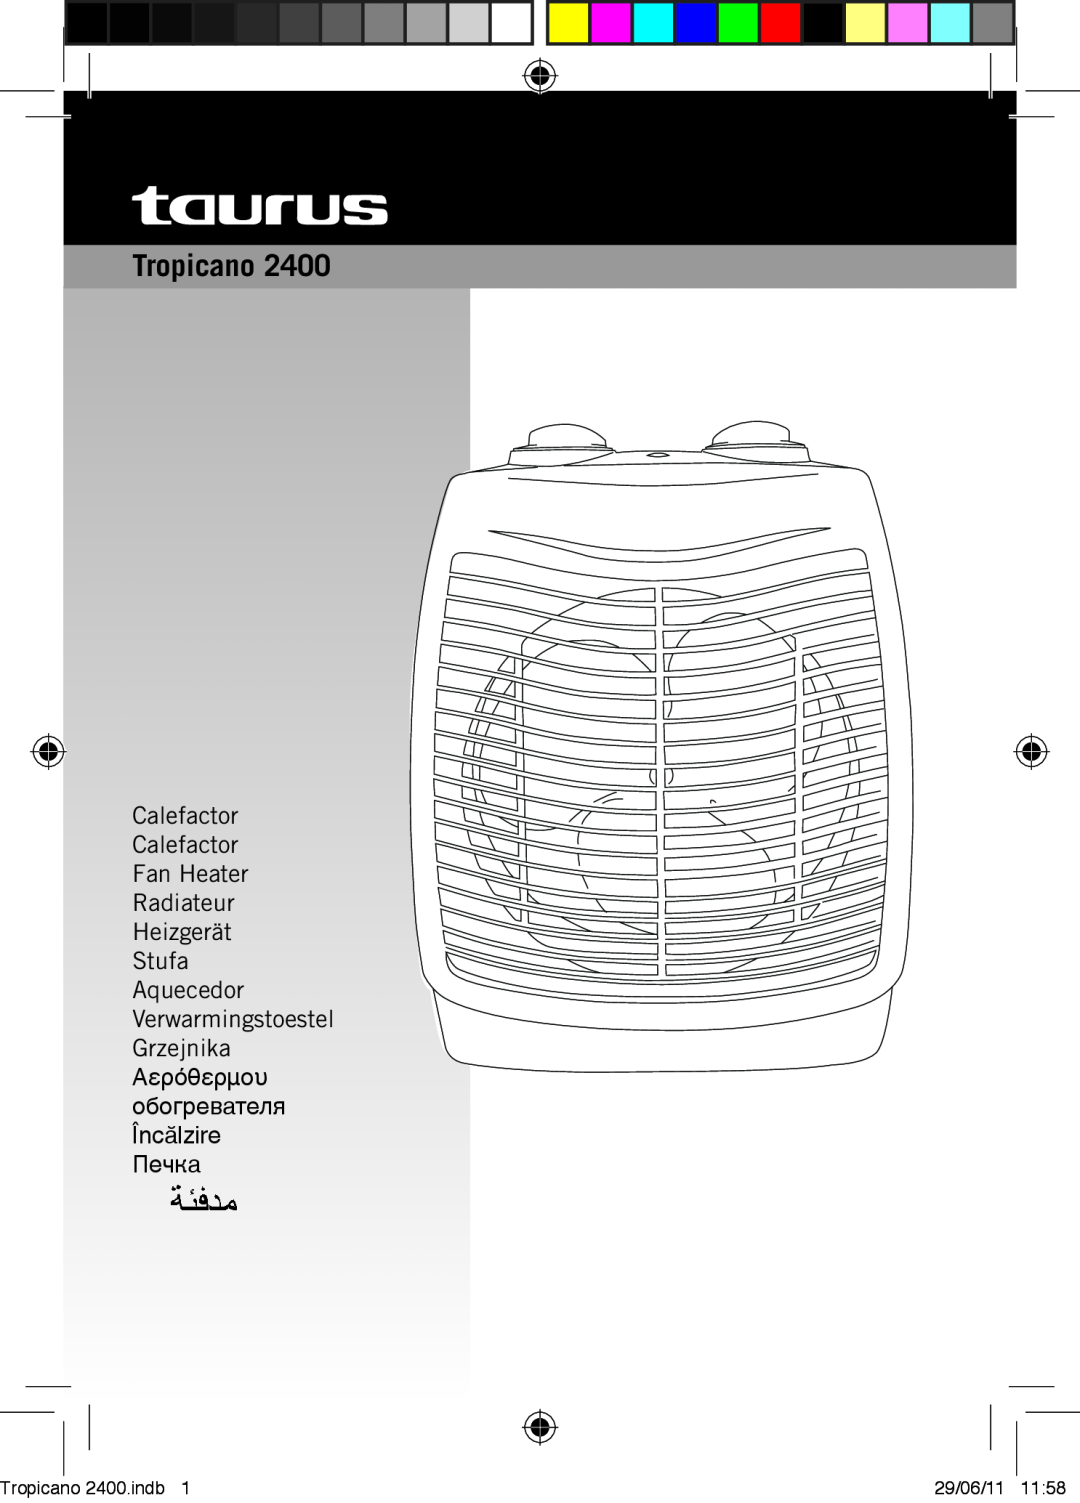 Taurus Group Tropicano 2400 manual Calefactor Calefactor Fan Heater Radiateur, indb, 29/06/11 